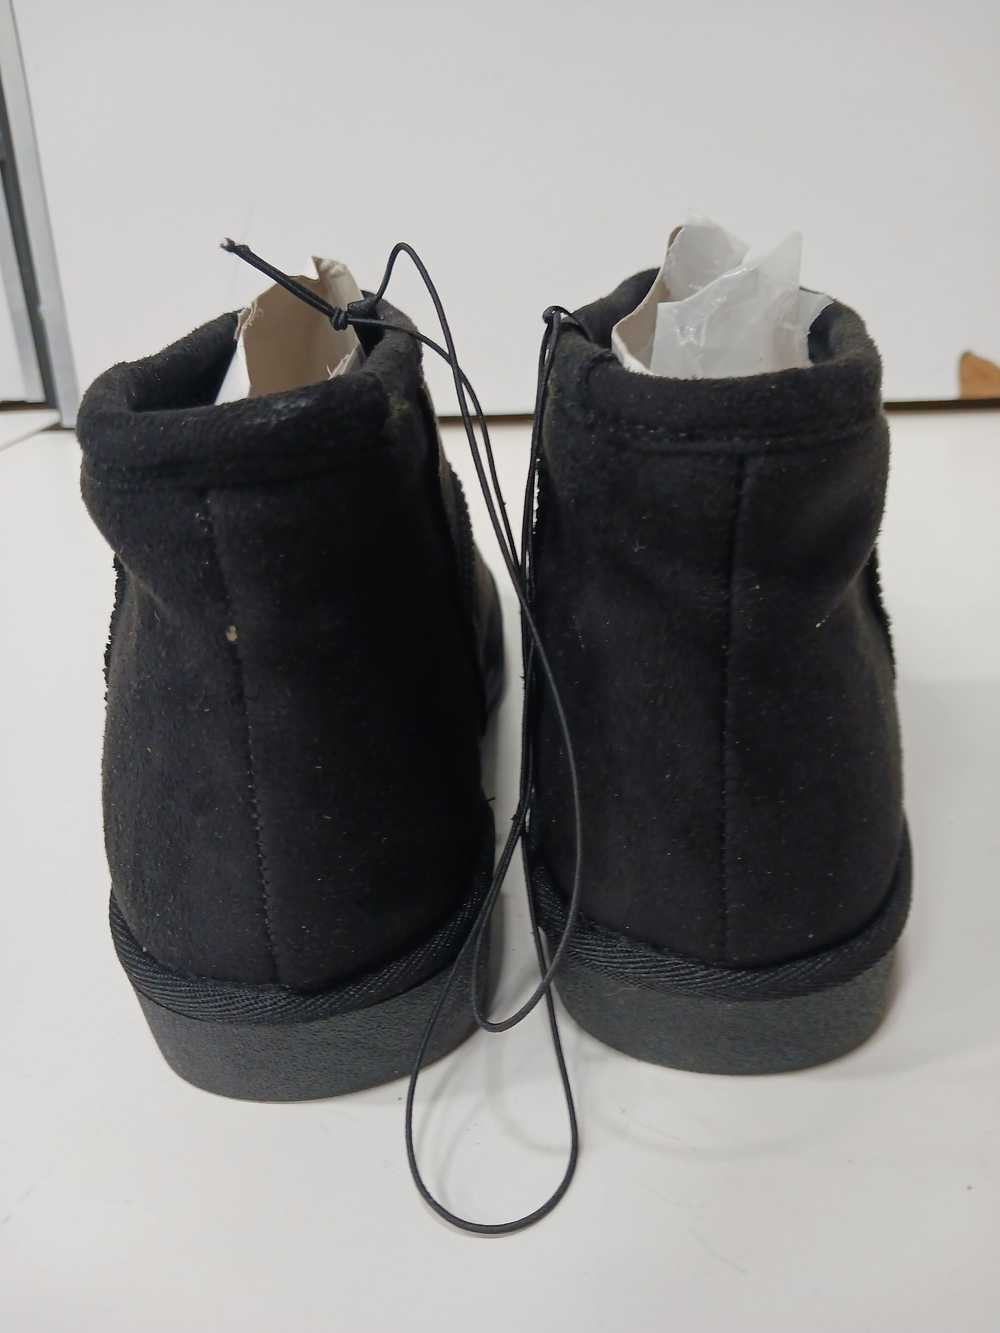 Arizona Jean Co. Women's Black Boots Size 7 - image 4